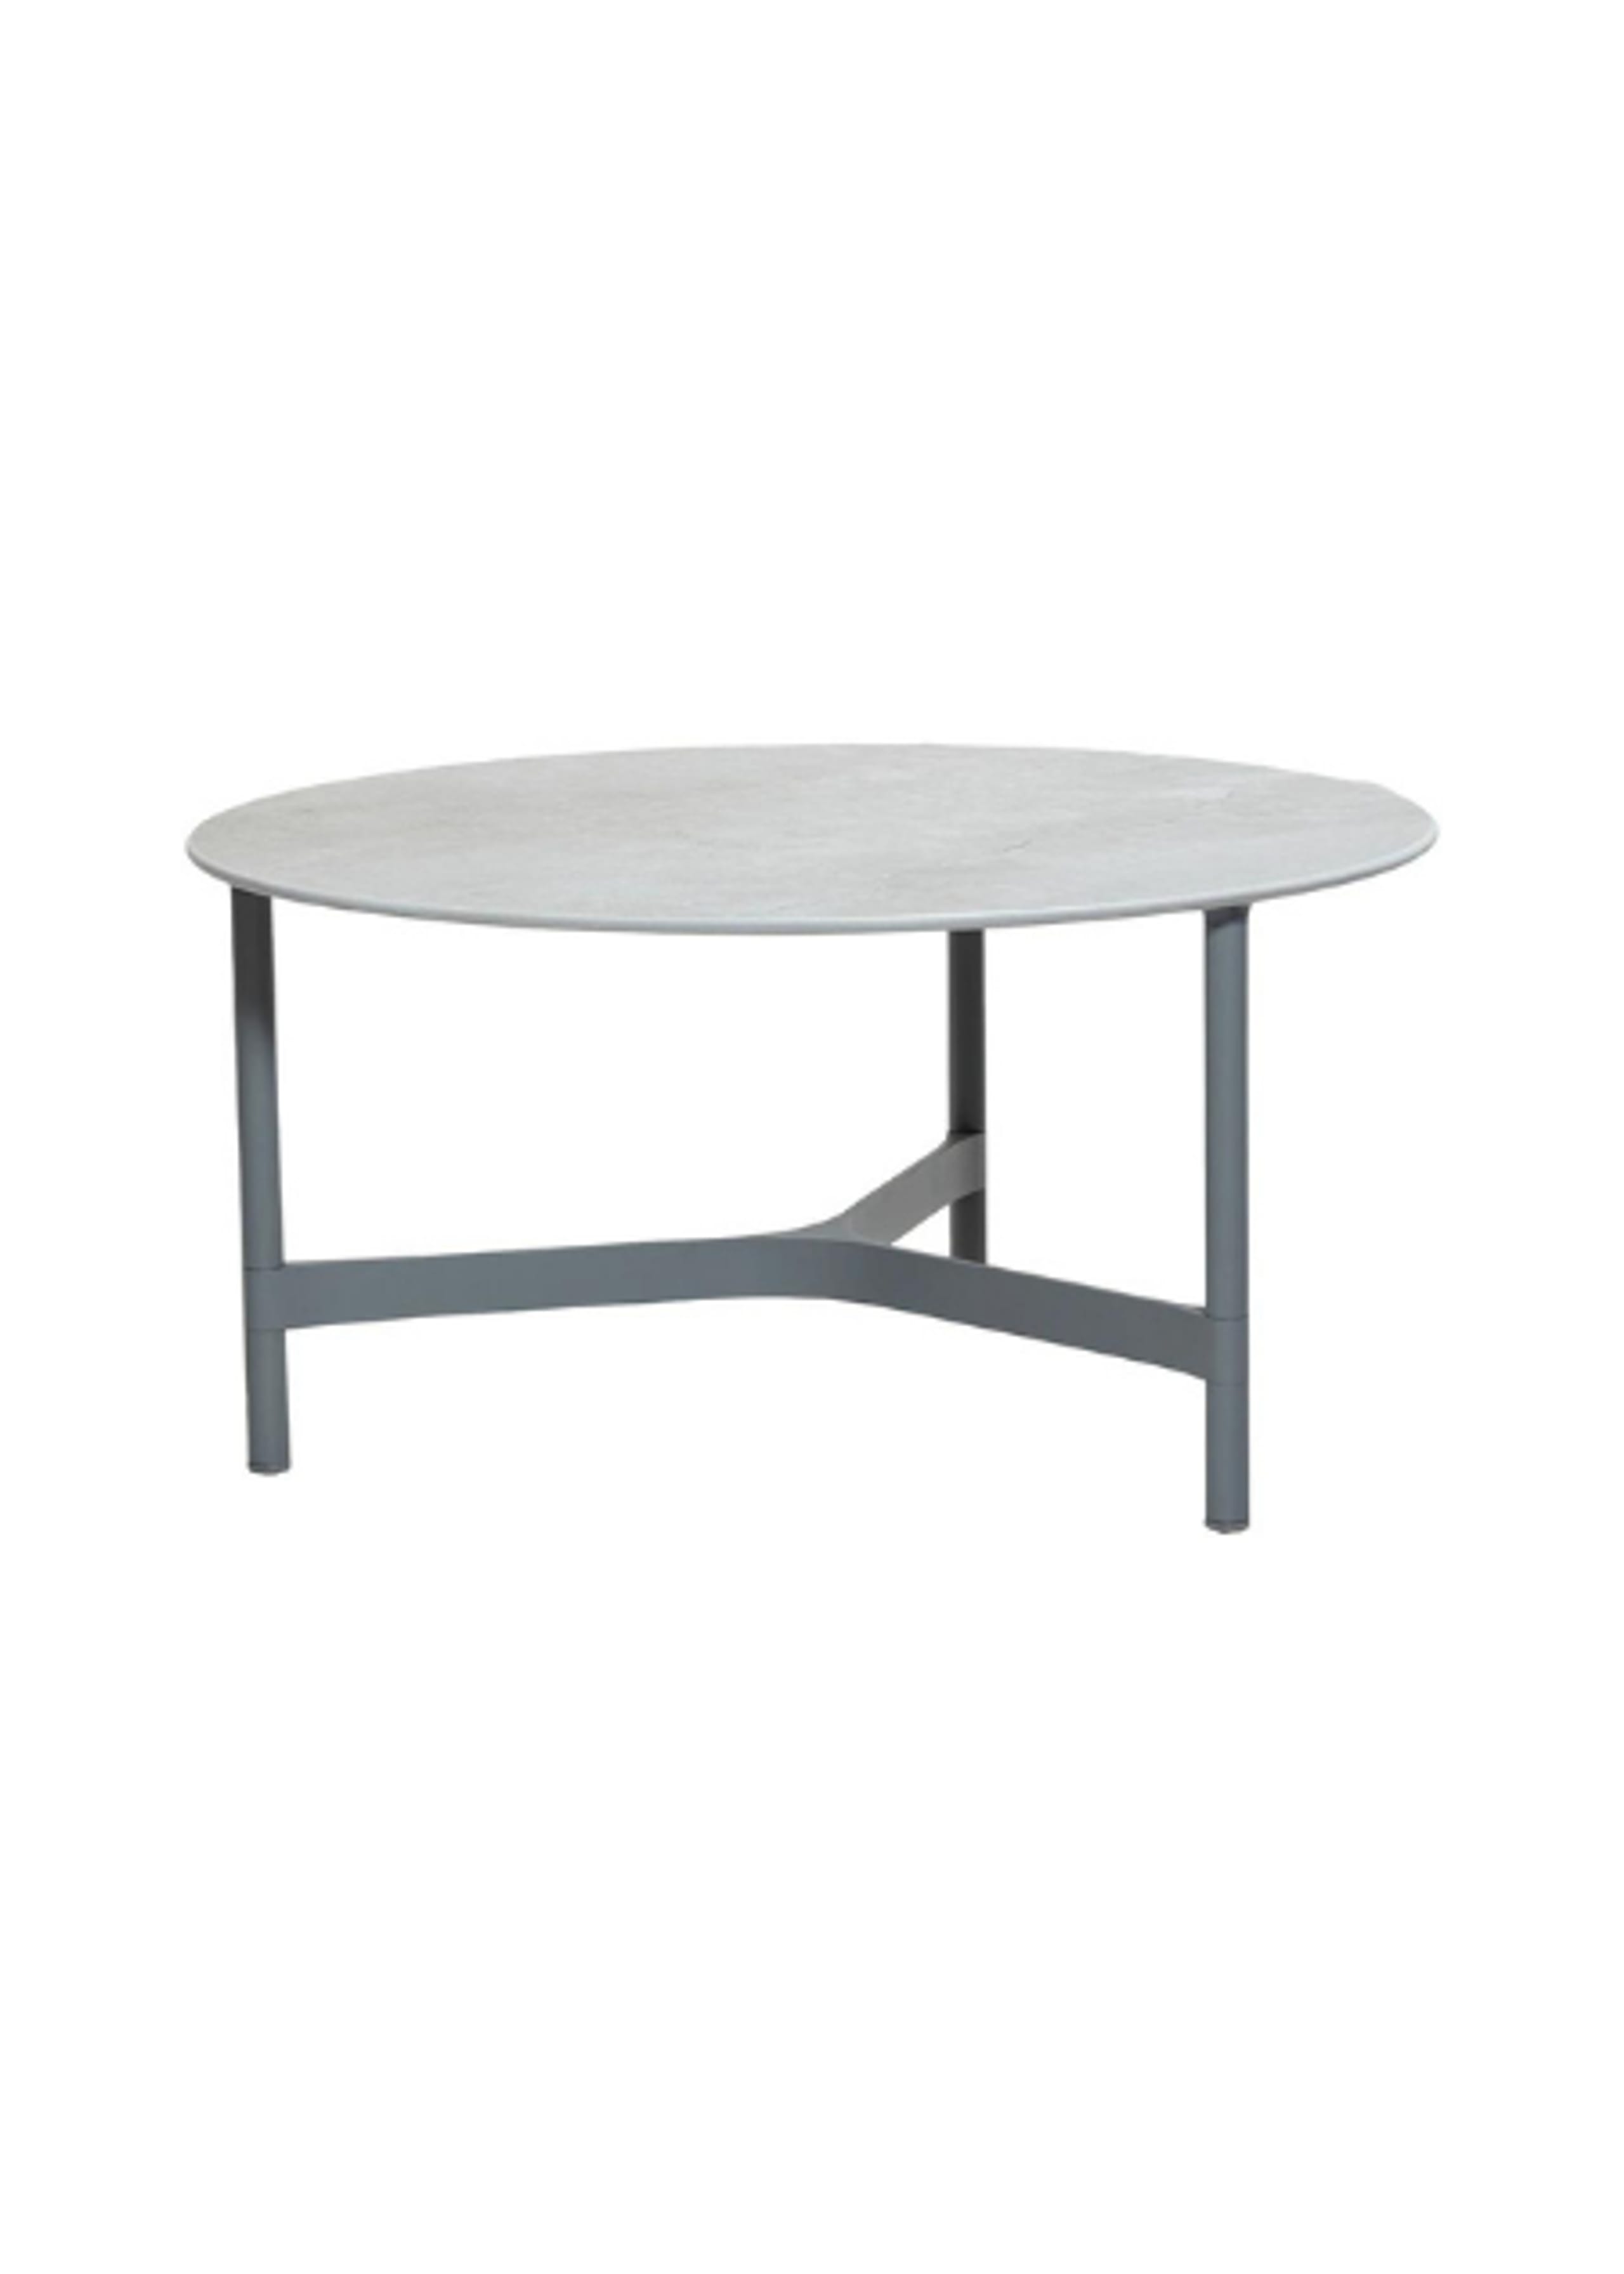 Cane-line - Lounge table - Twist Coffee Table - Light Grey, Aluminium / Fossil Grey, Ceramic - Large